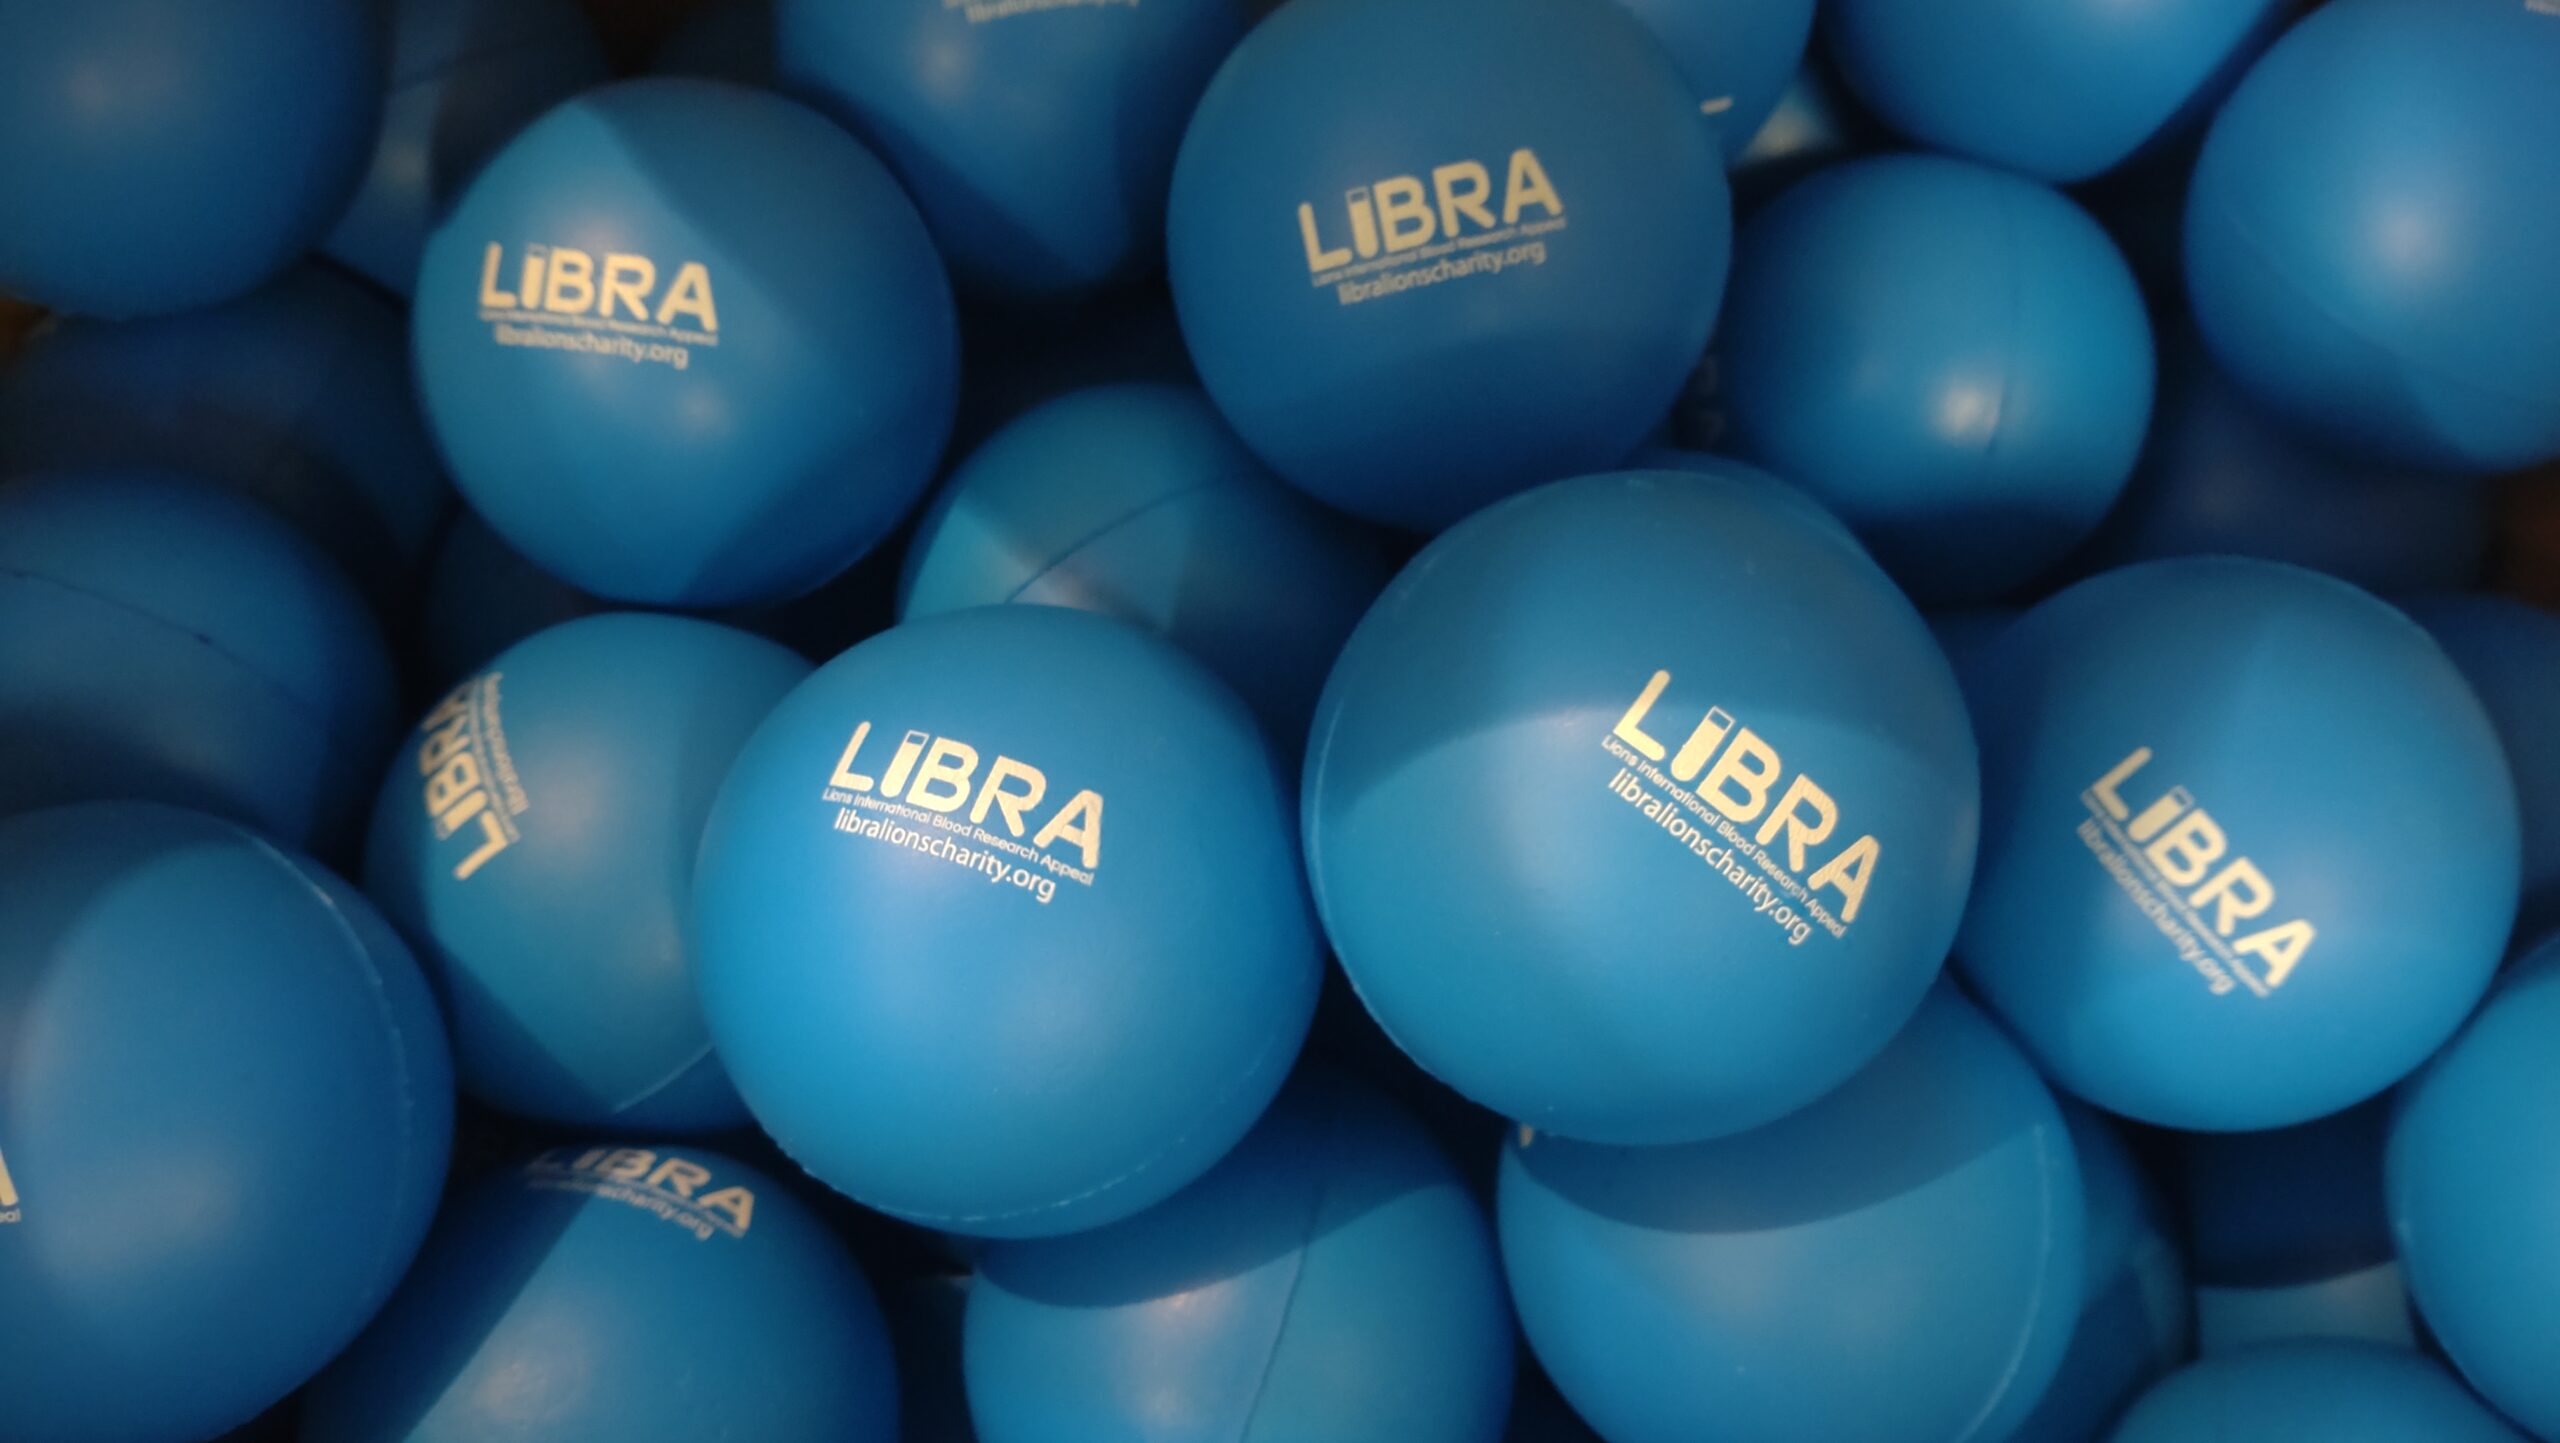 No Stress With LIBRA!